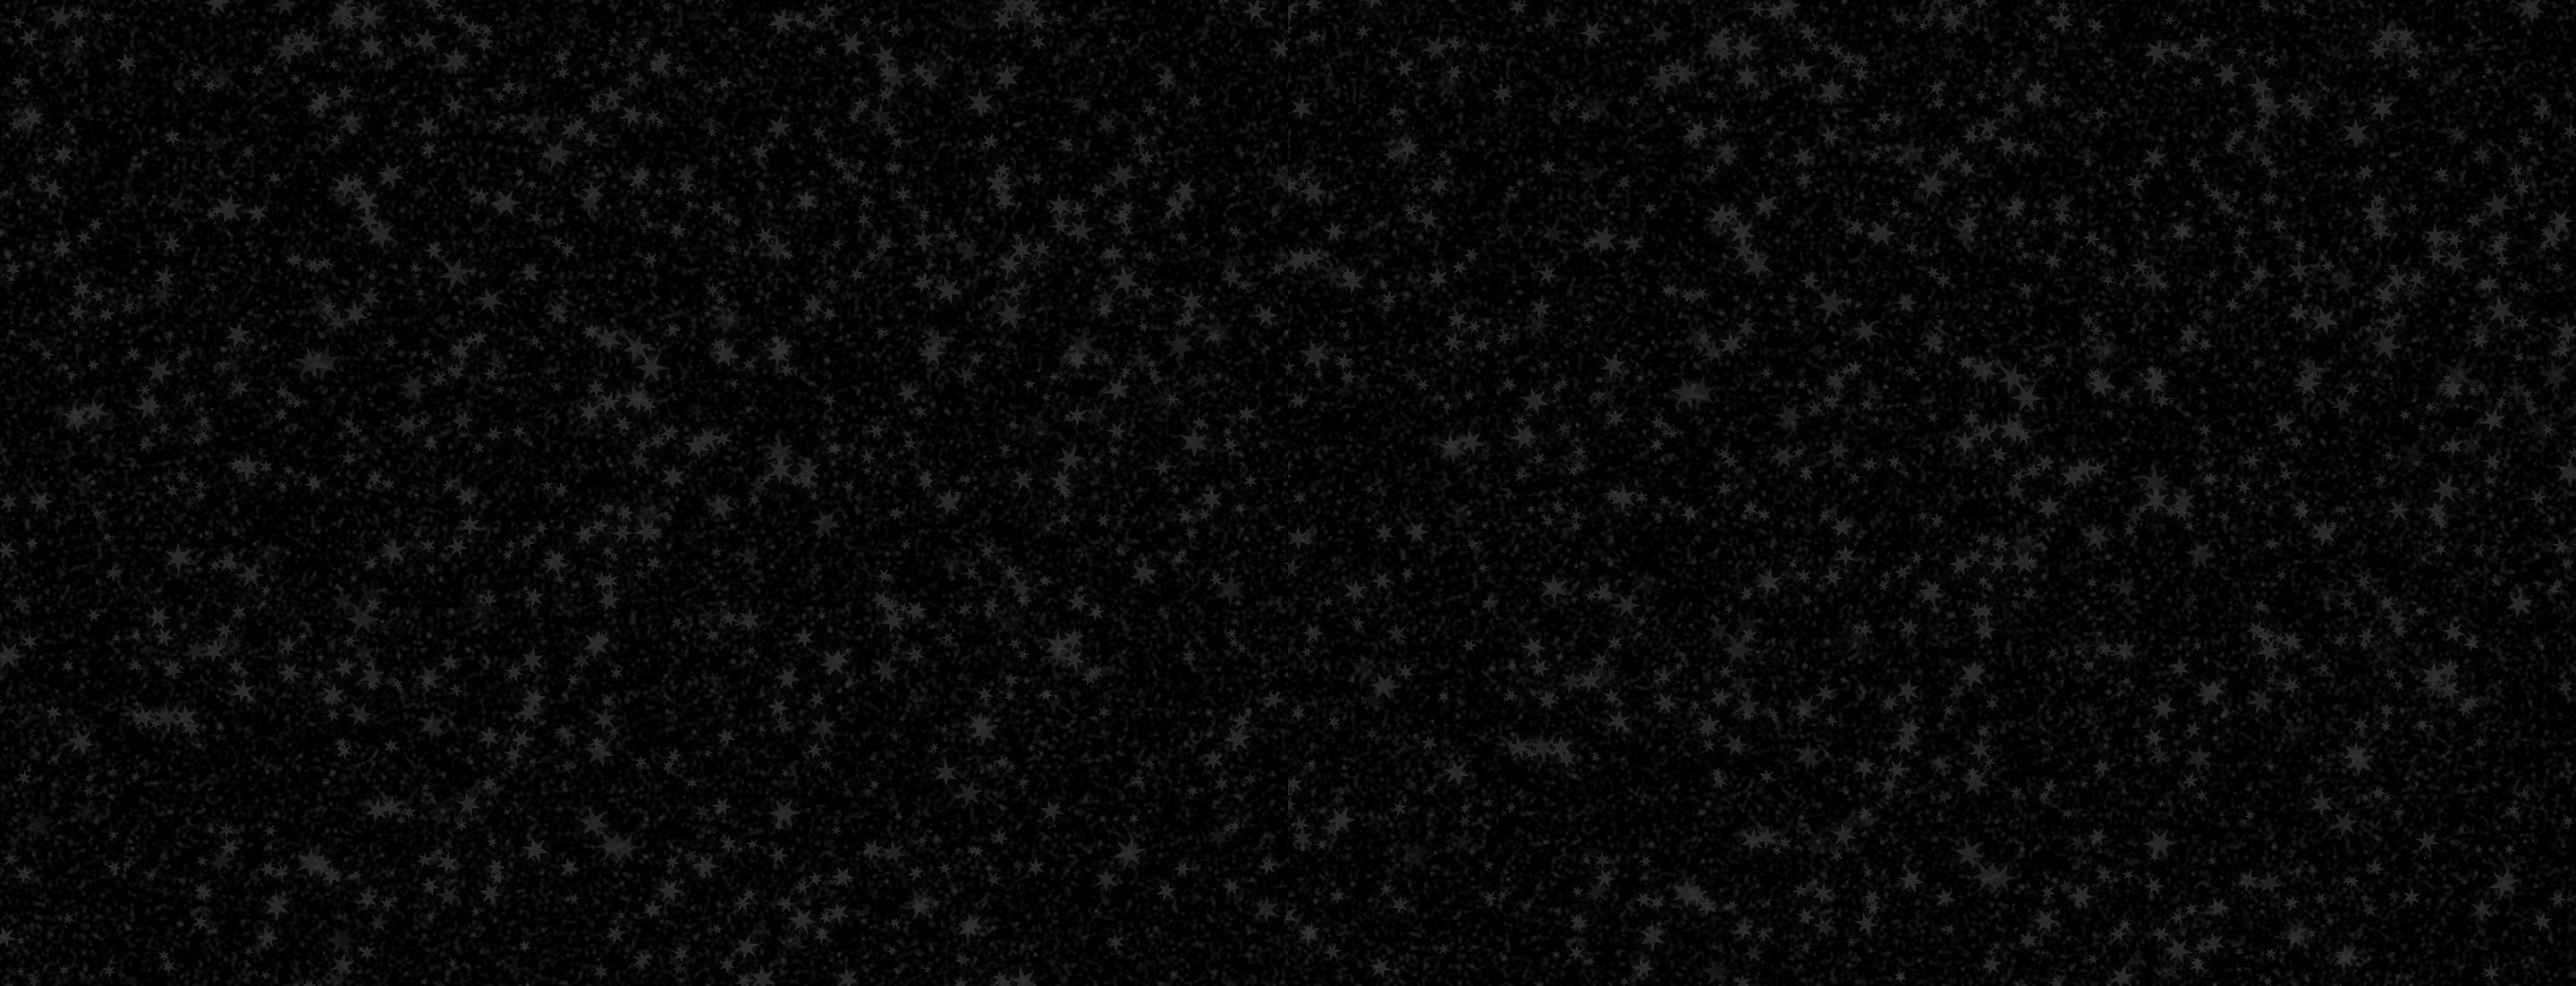 Black glitter background image